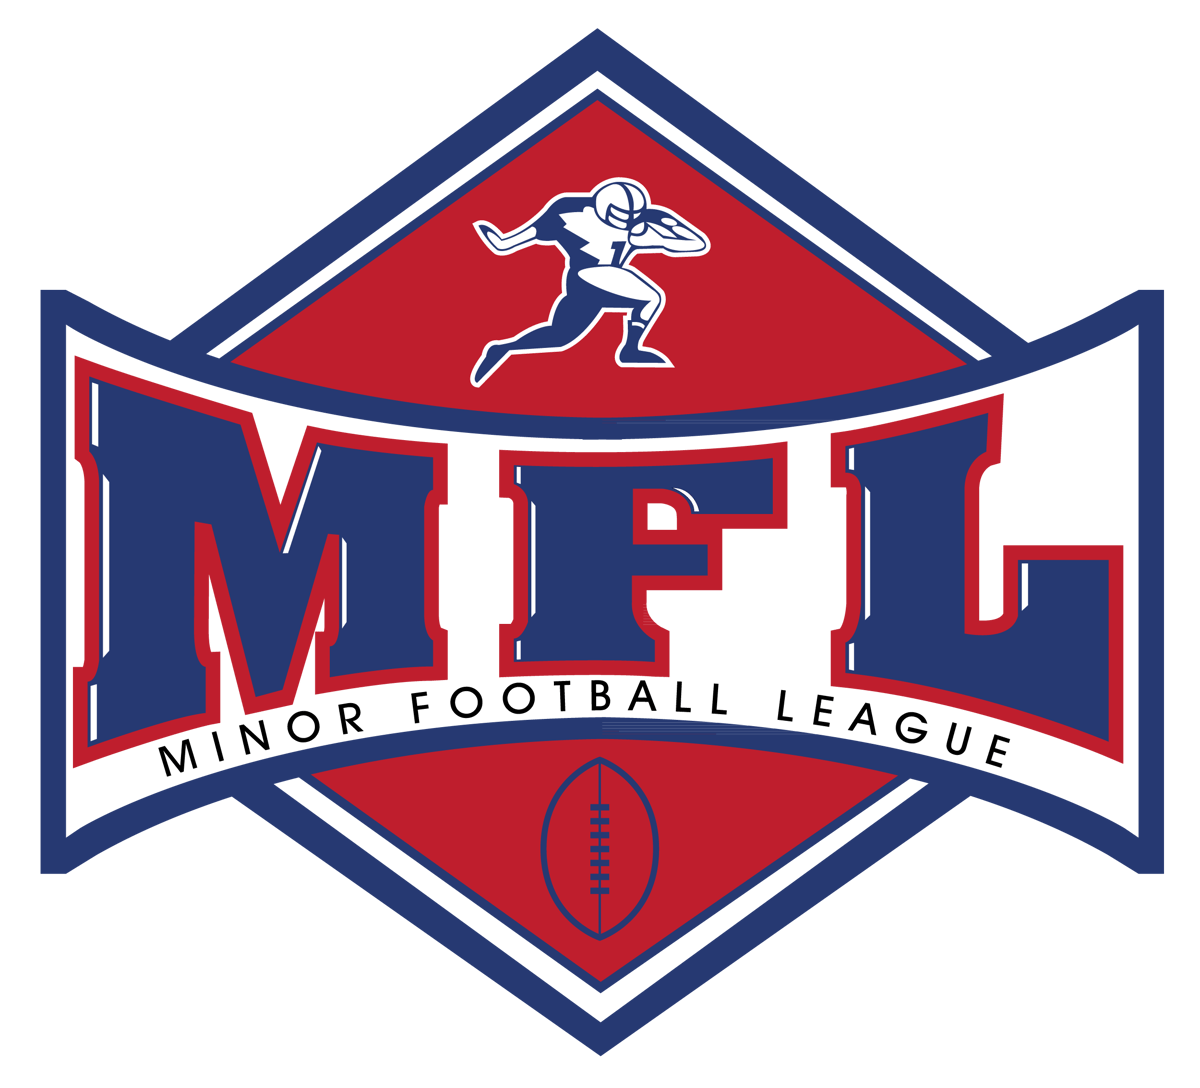 Home - Minor Football League Mfl